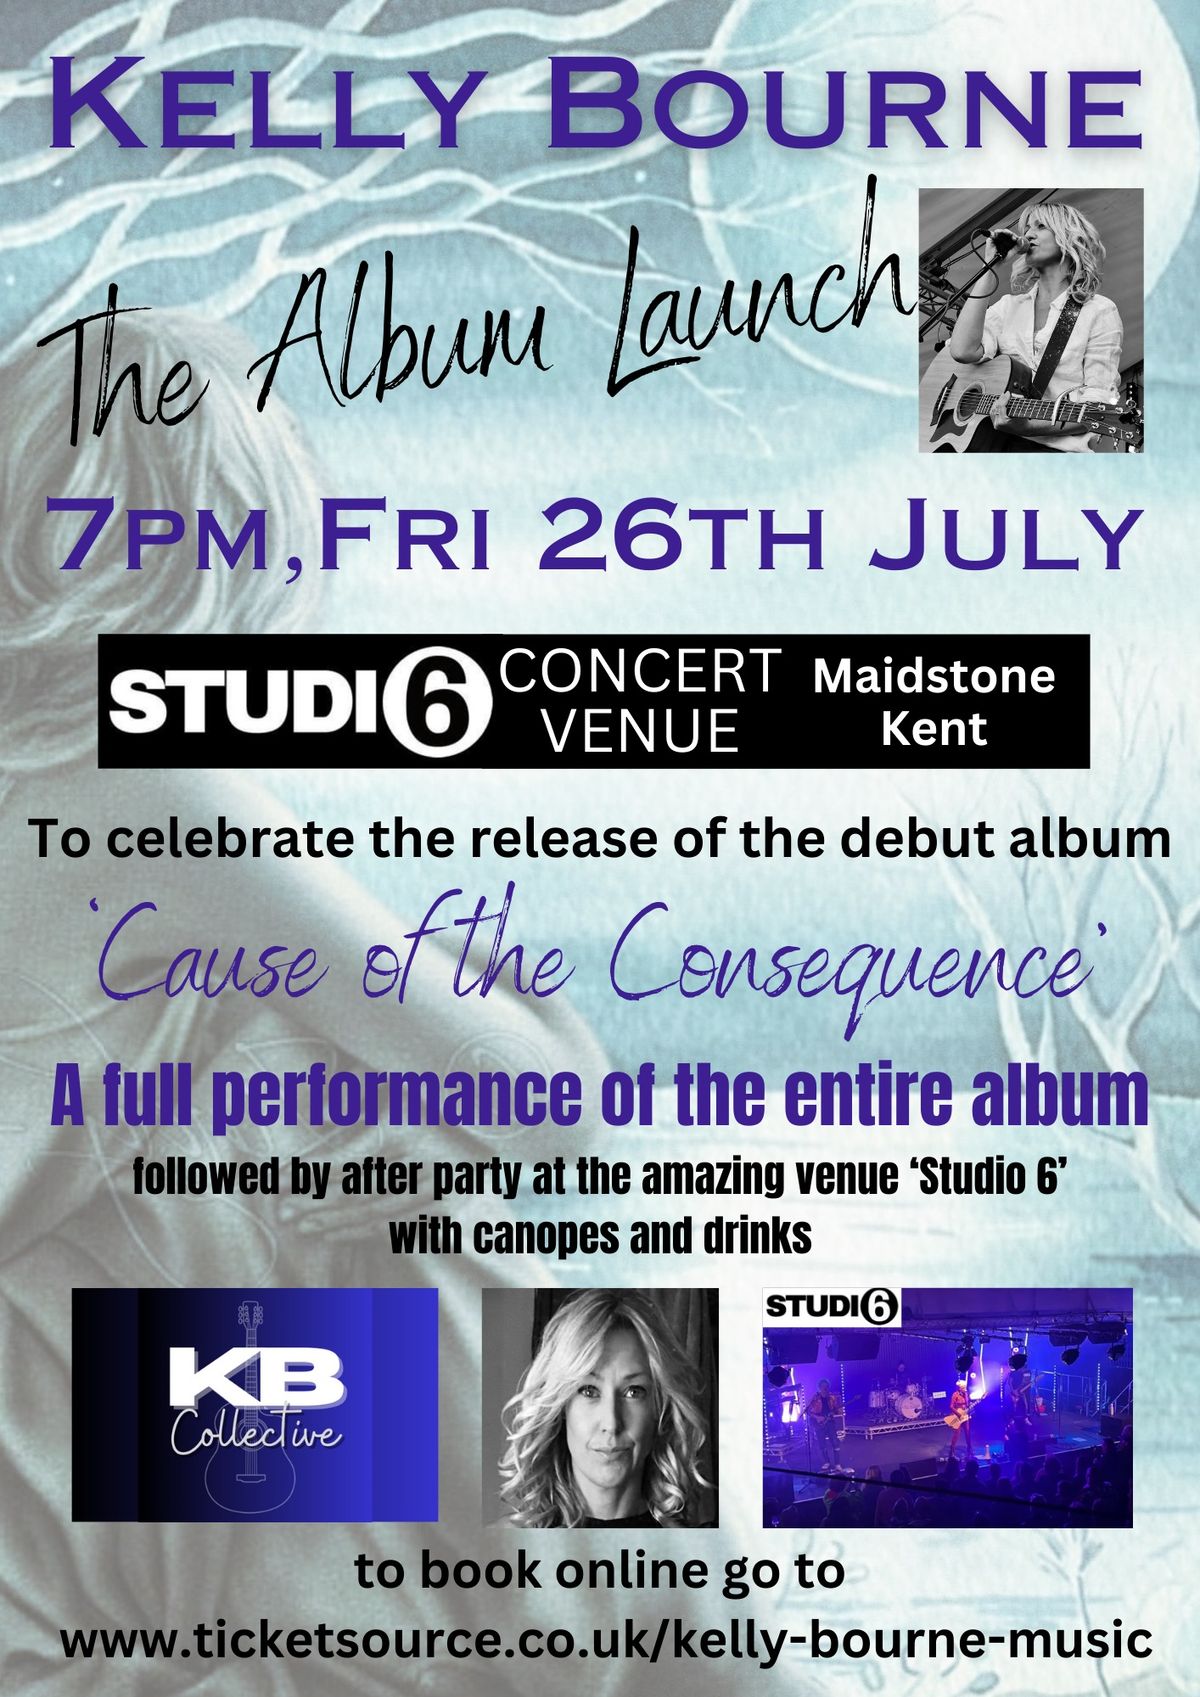 Kelly Bourne - The Album Launch